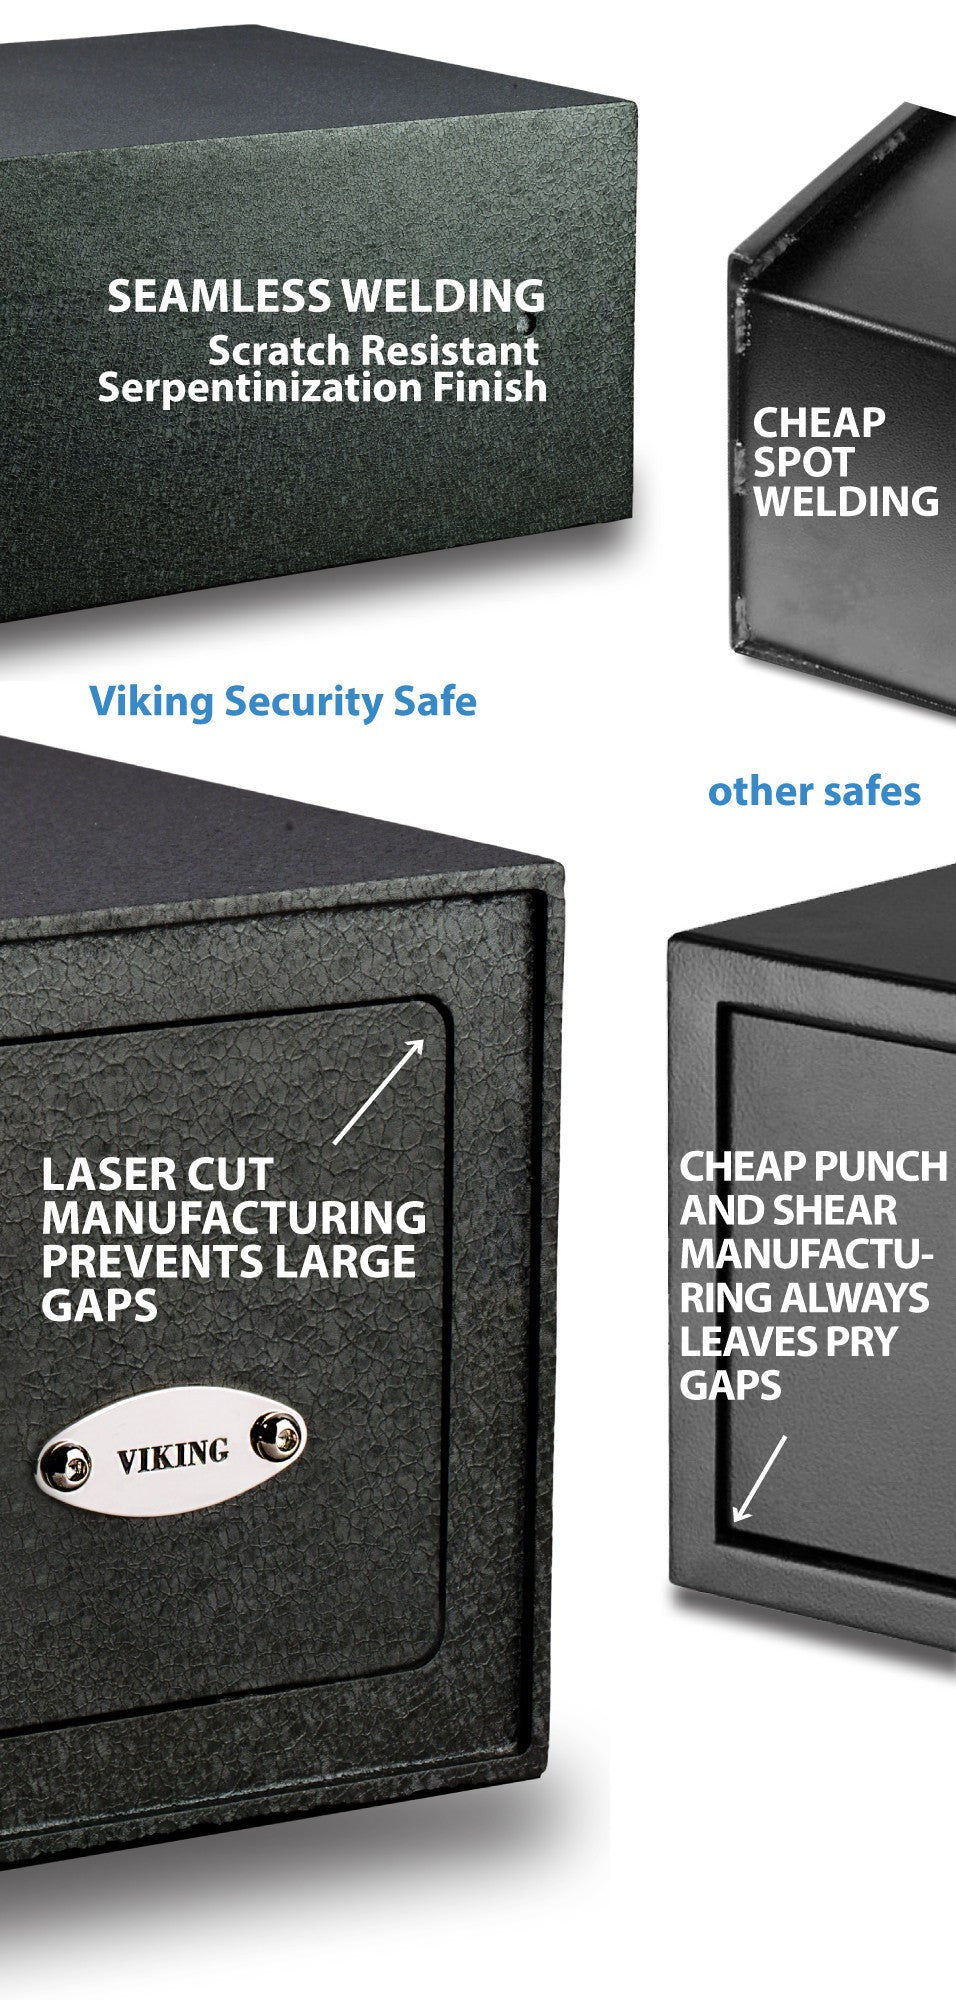 Viking VS-25DBL Small Depository Biometric Fingerprint Safe